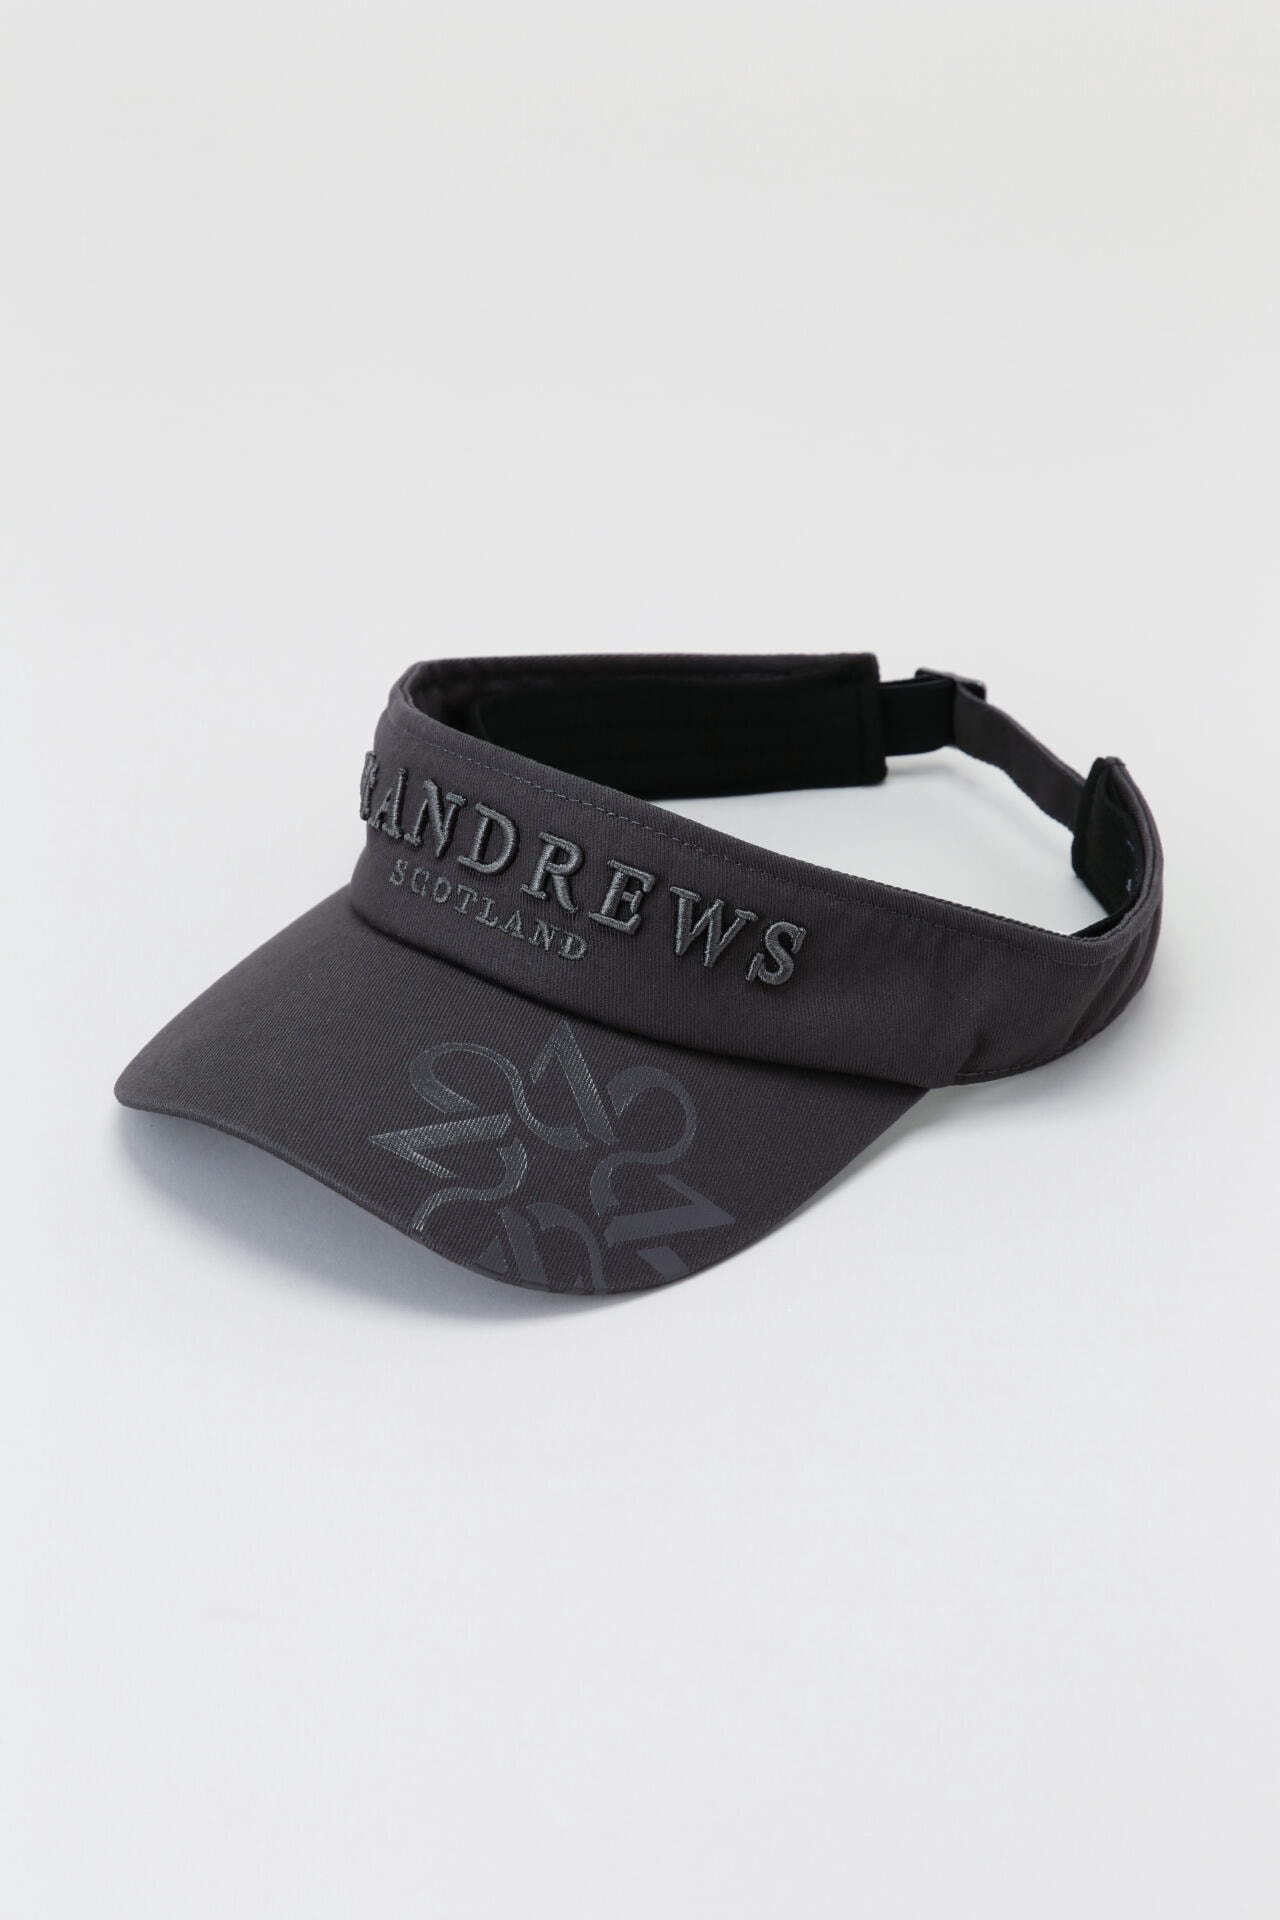 St ANDREWS】刺繍ロゴバイザー (UNISEX)